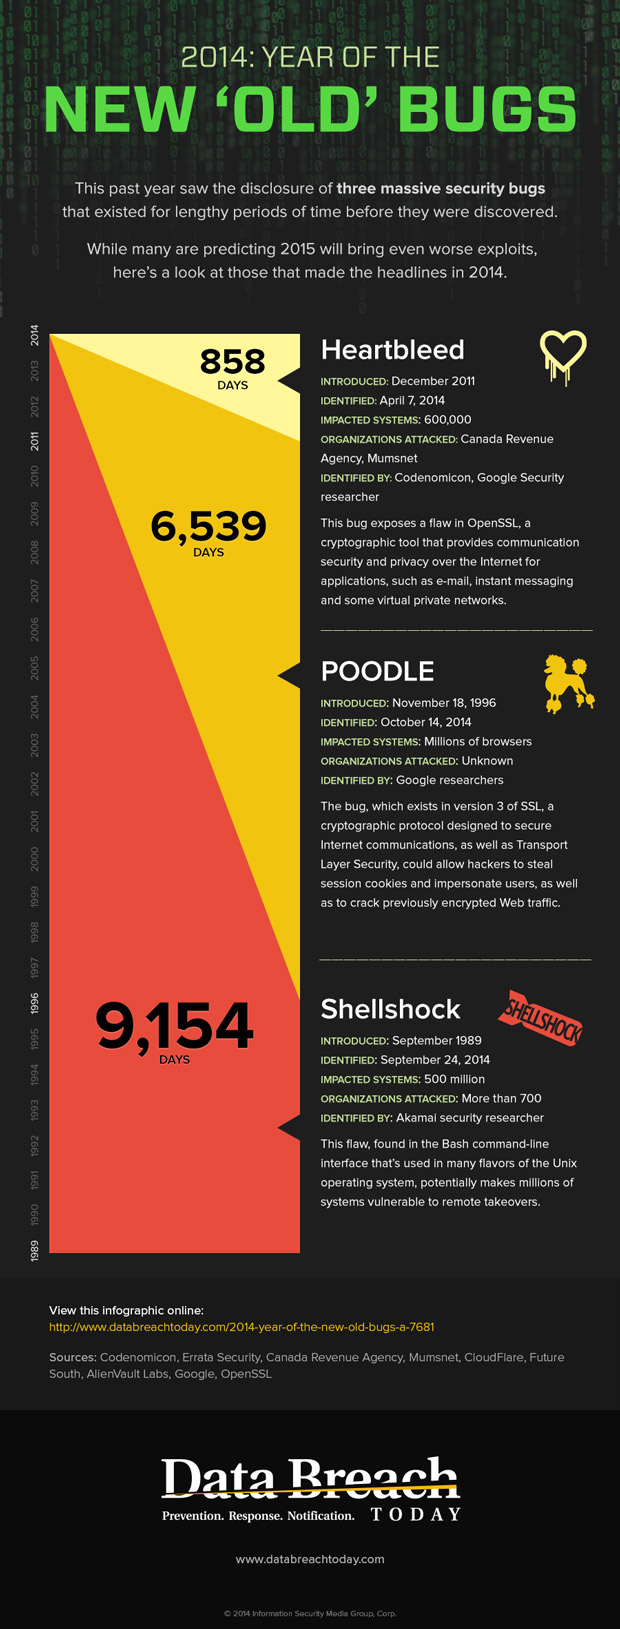 What is Shellshock? This infographic explains how a Shellshock